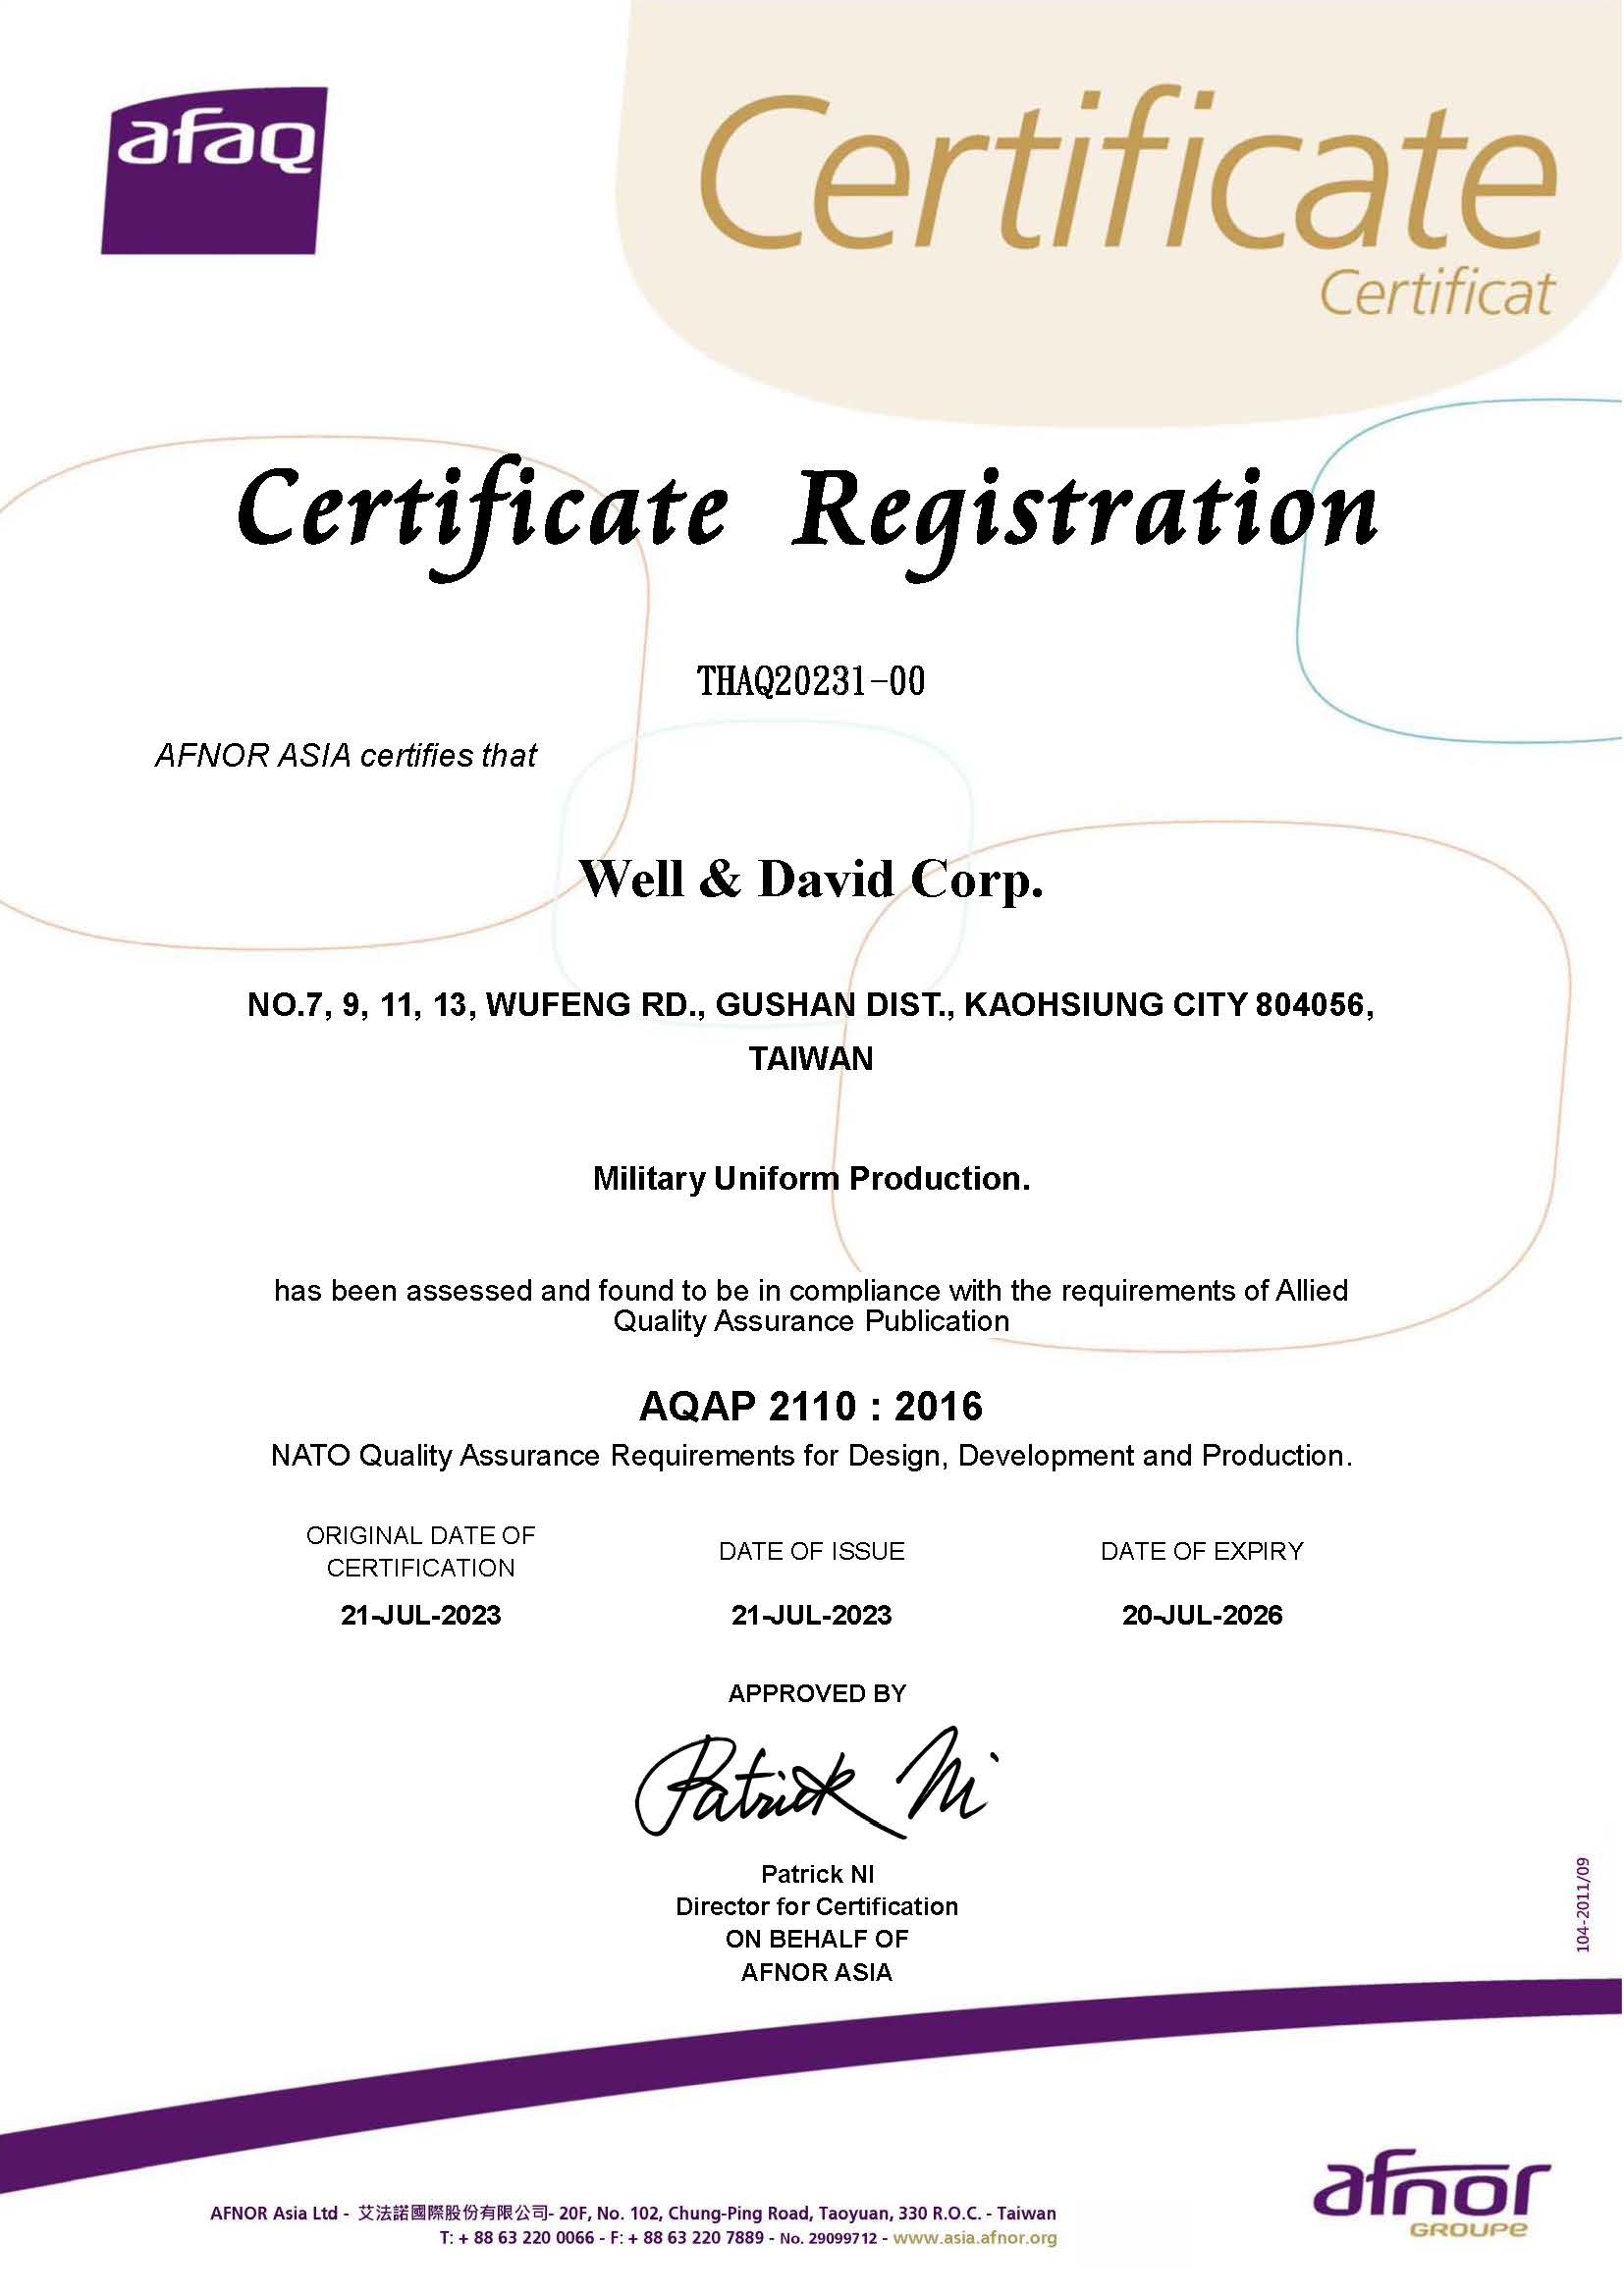 AQAP 2110: 2016 certificering